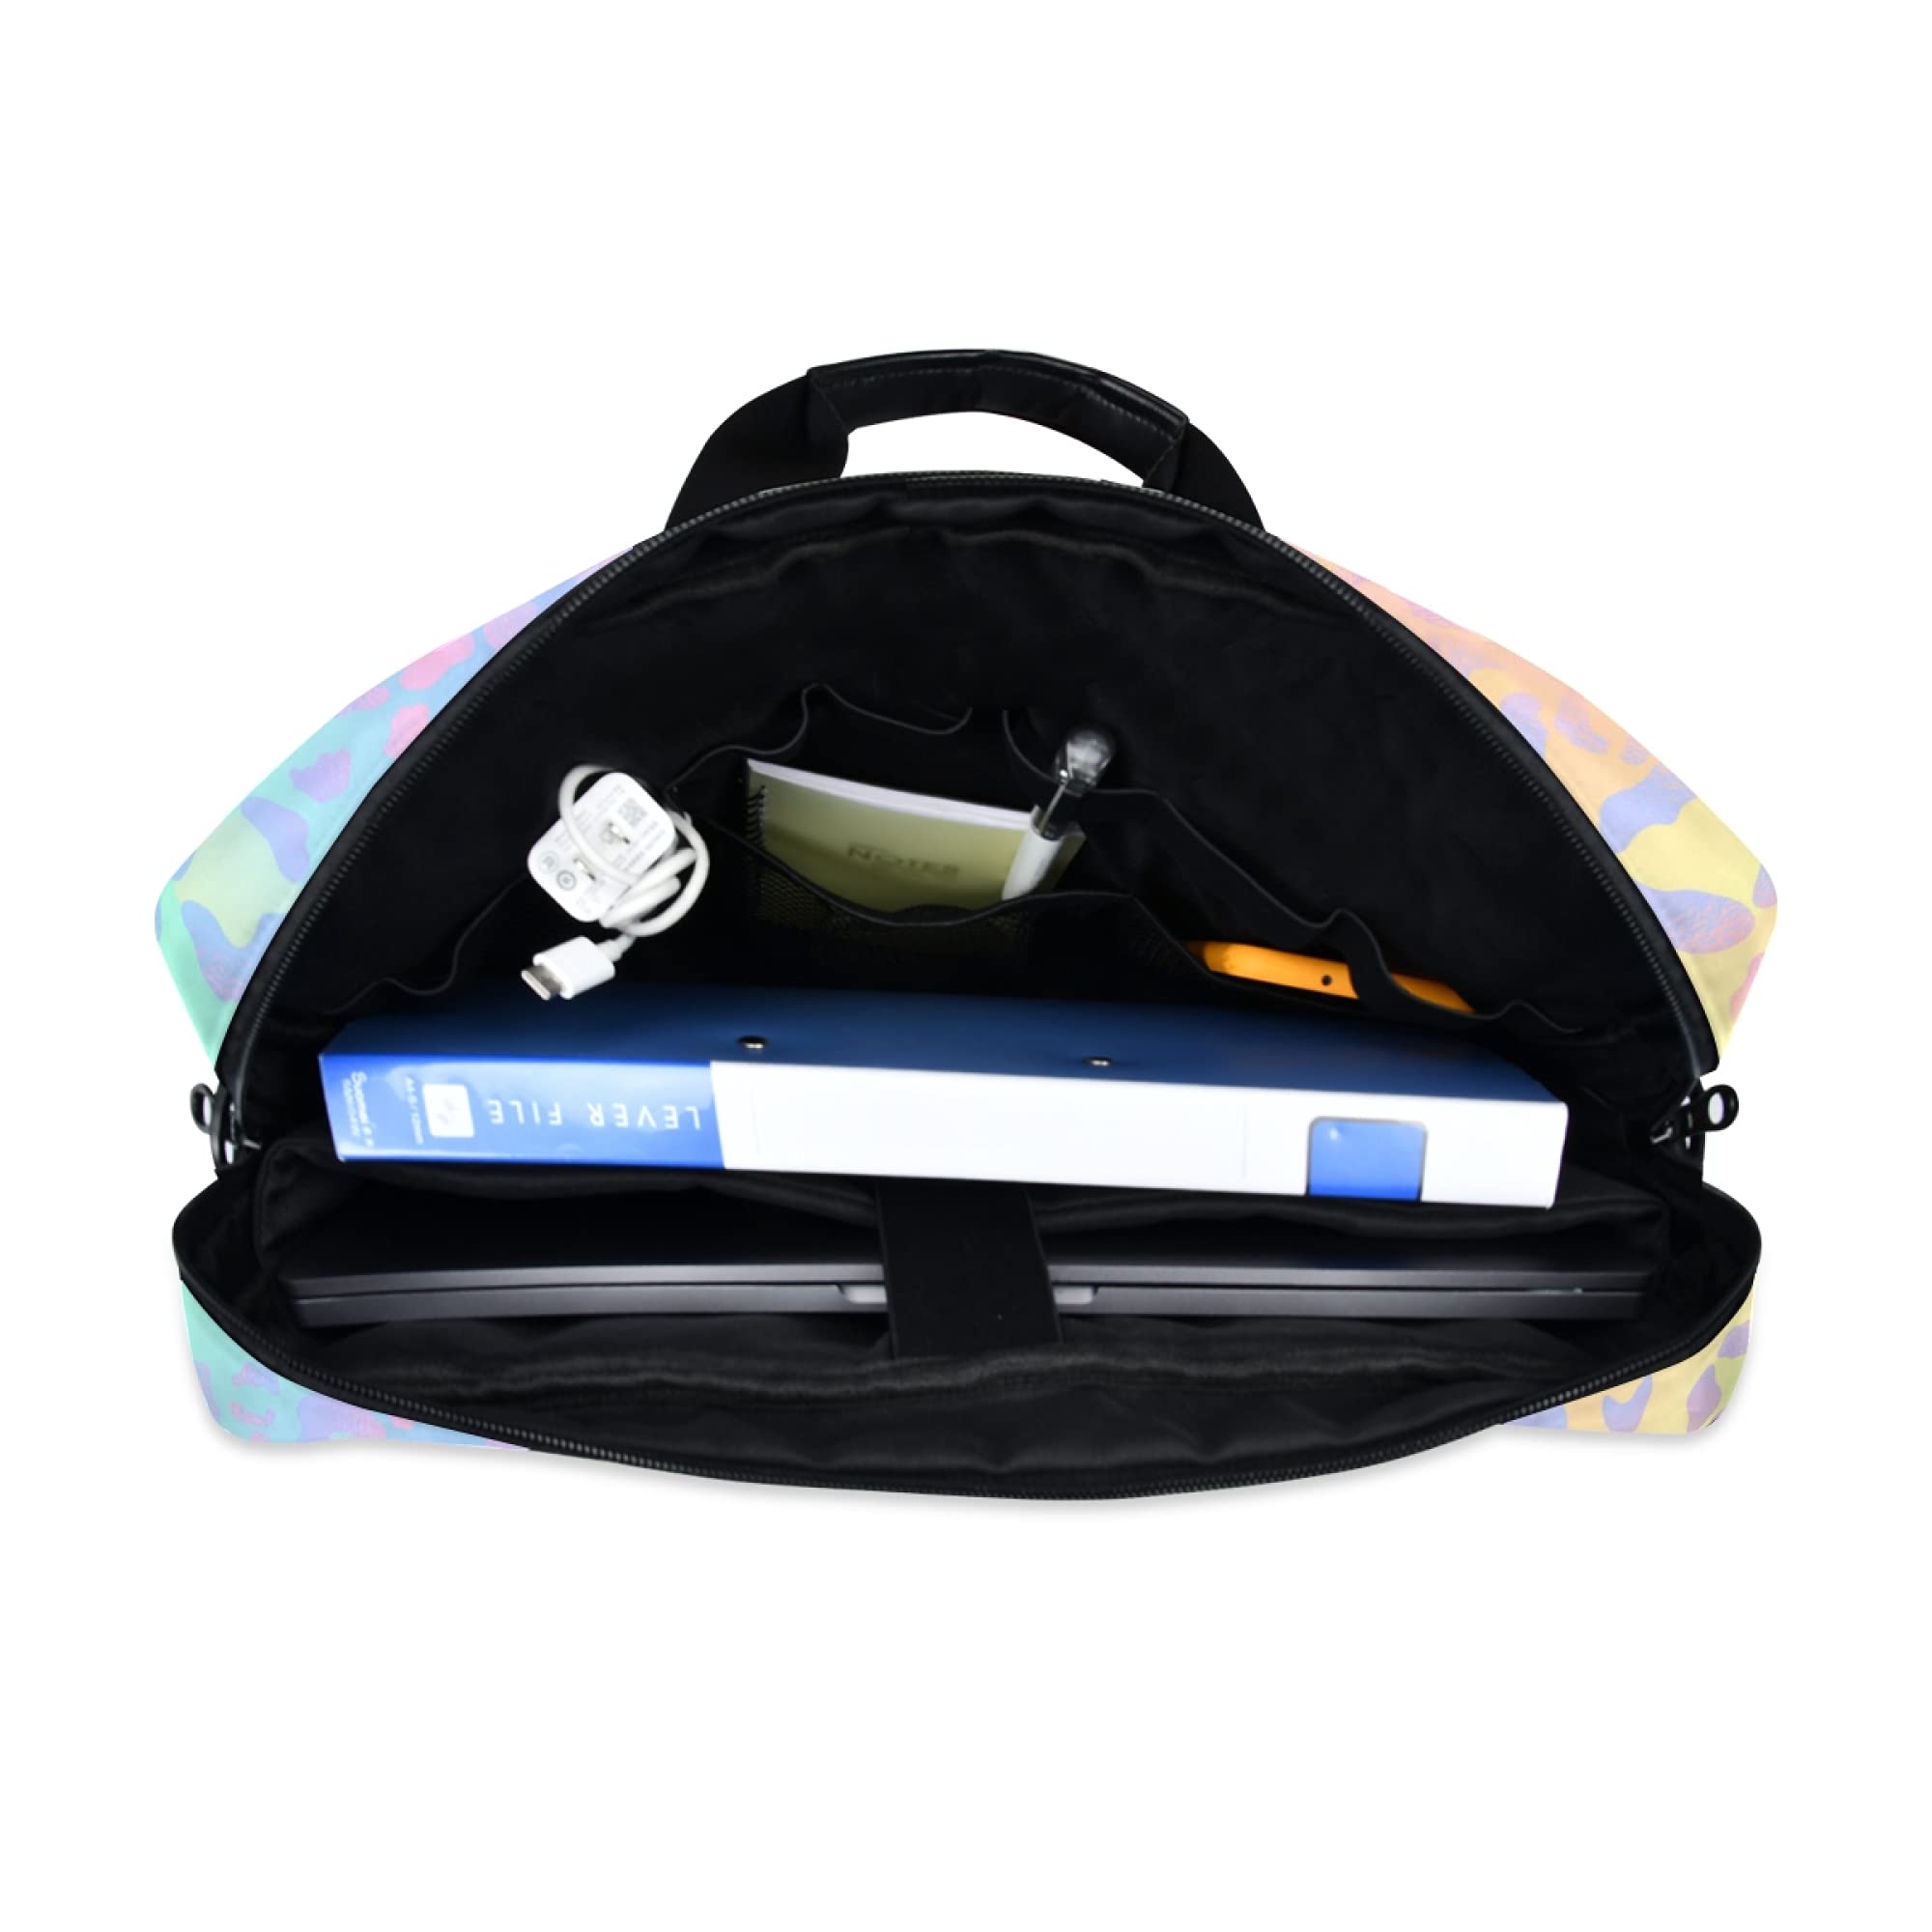 ALAZA Rainbow Leopard Print Rose Gold Cheetah Laptop Case Bag Sleeve Portable Crossbody Messenger Briefcase wStrap Handle, 13 14 15.6 inch, Multicoloured